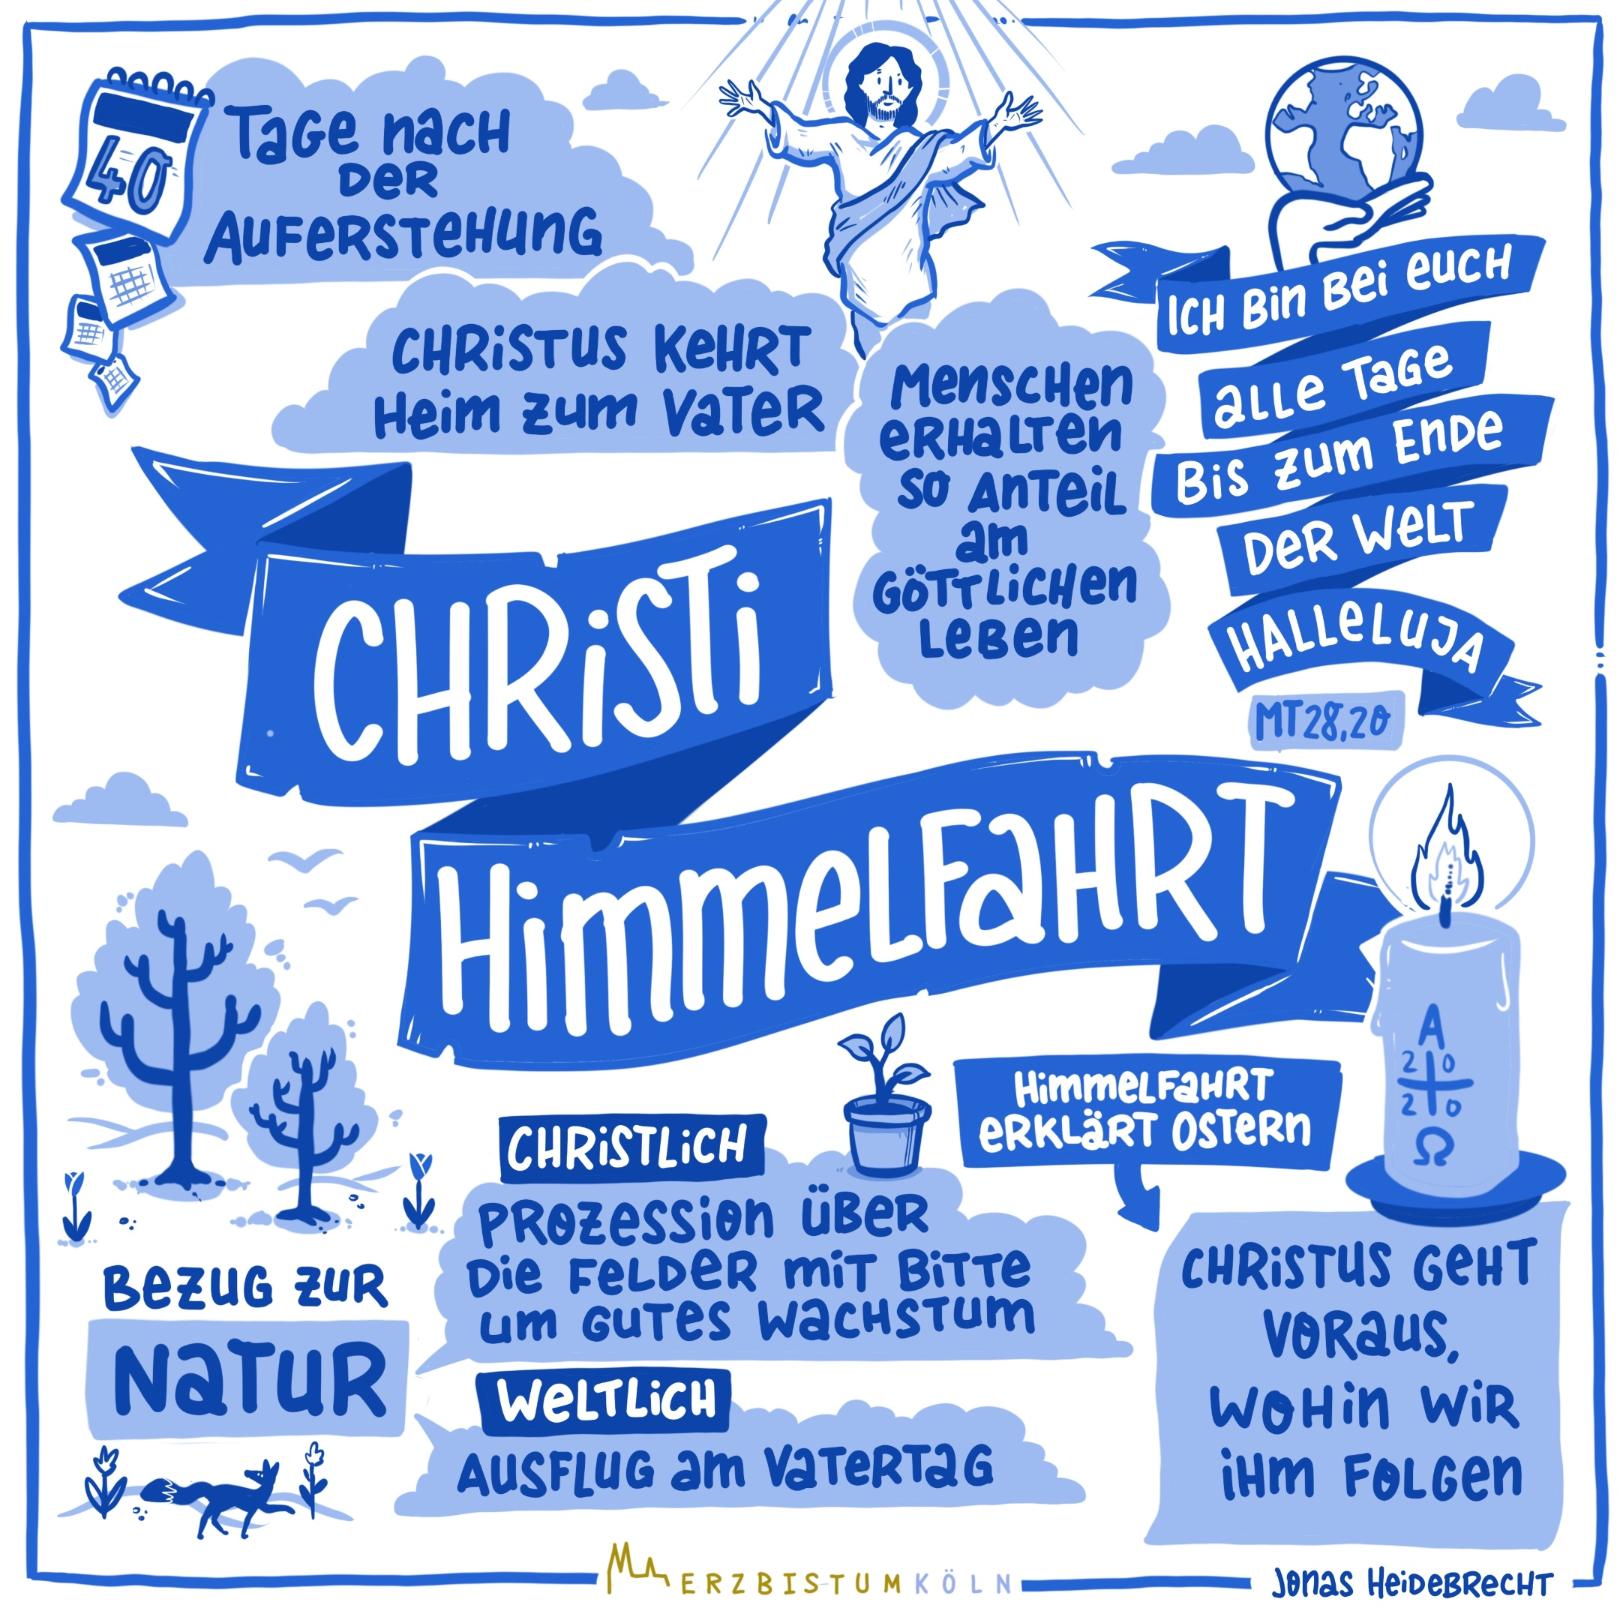 Christi Himmelfahrt (c) Erzbistum Köln / Jonas Heidebrecht in Pfarrbriefservice.de